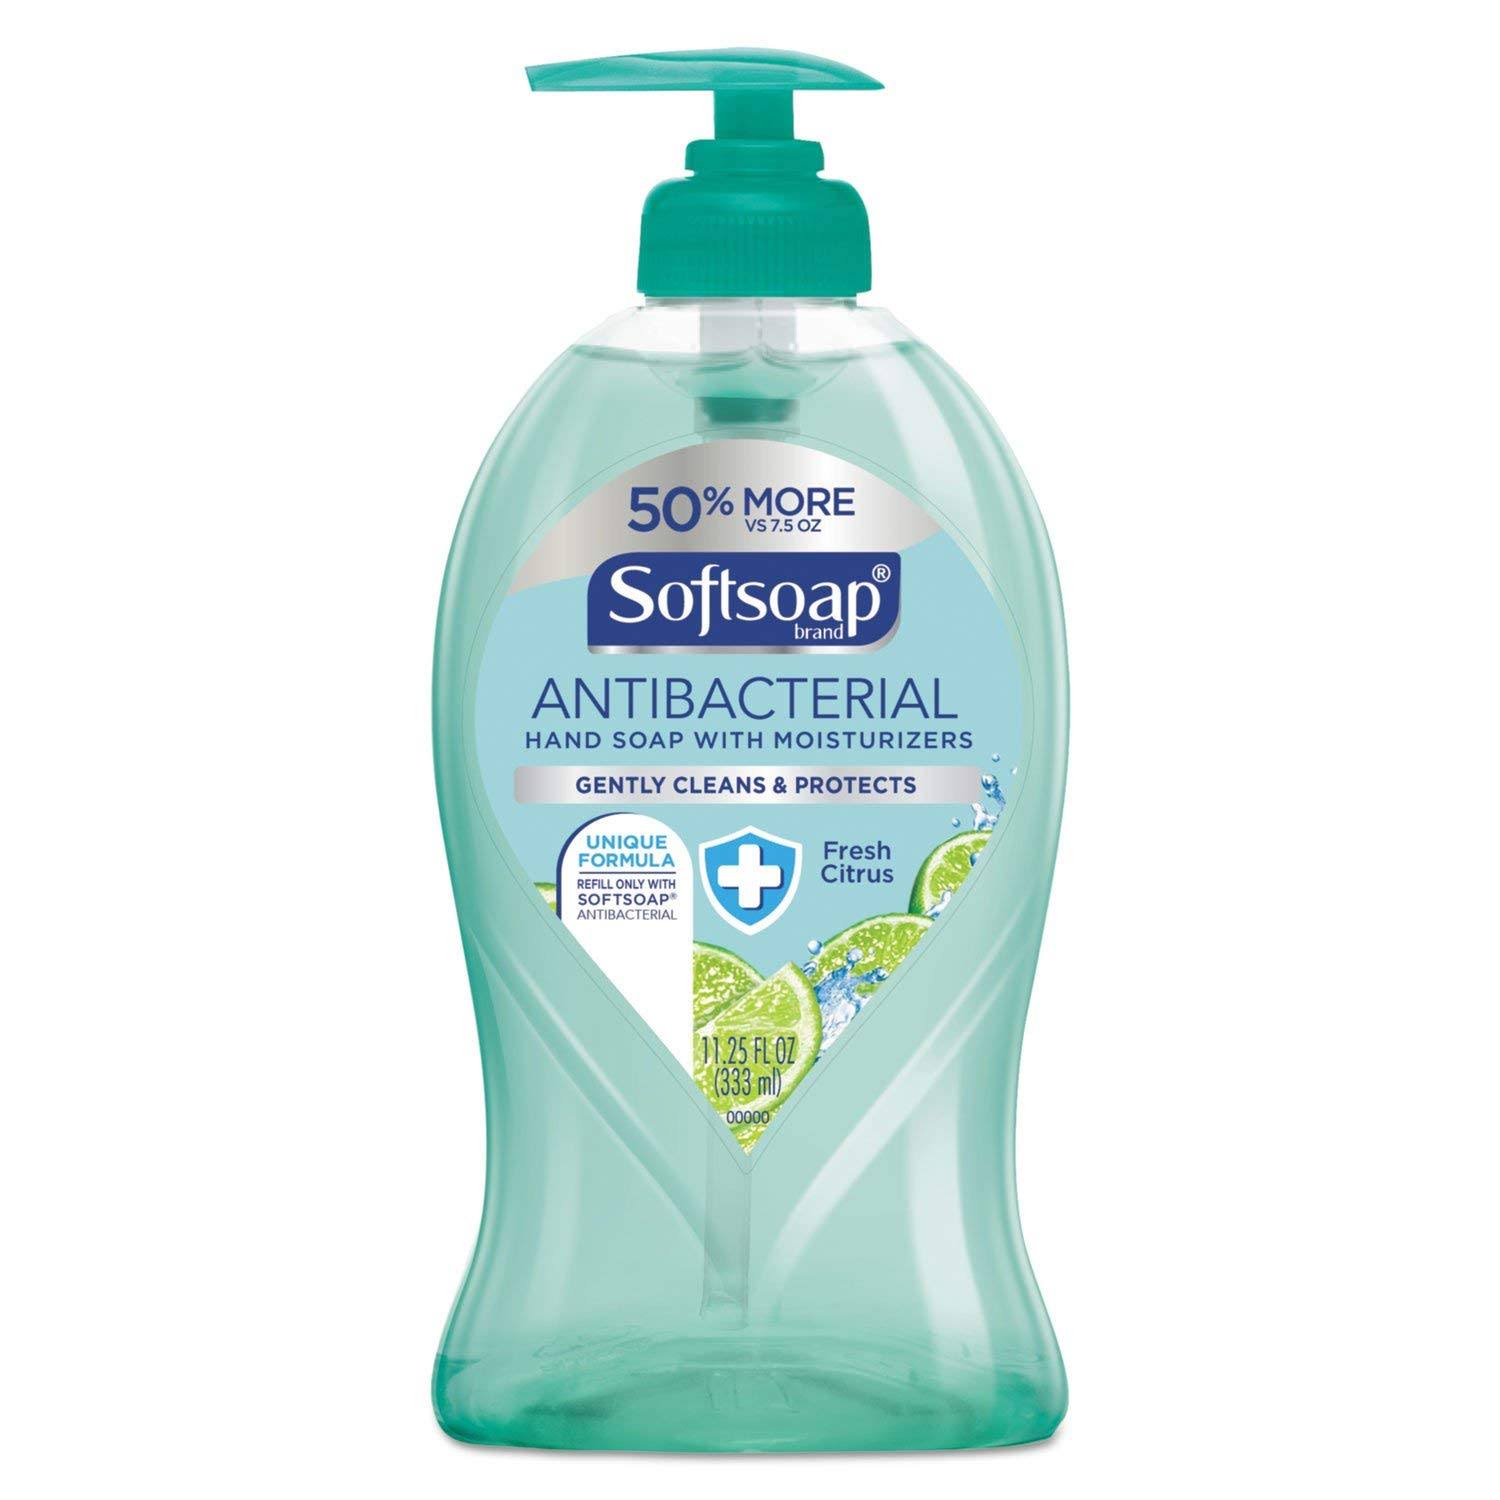 Softsoap Antibacterial Hand Soap - Fresh Citrus, 11.25oz